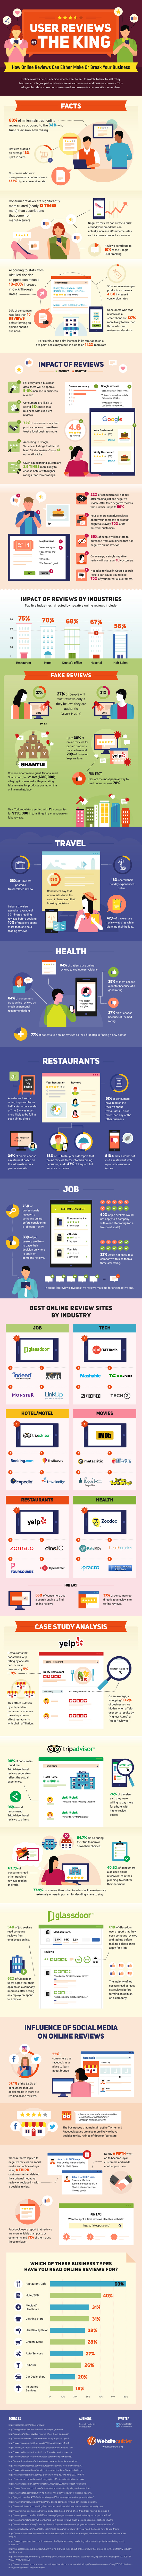 Online Reviews Infographic by websitebuilder.org